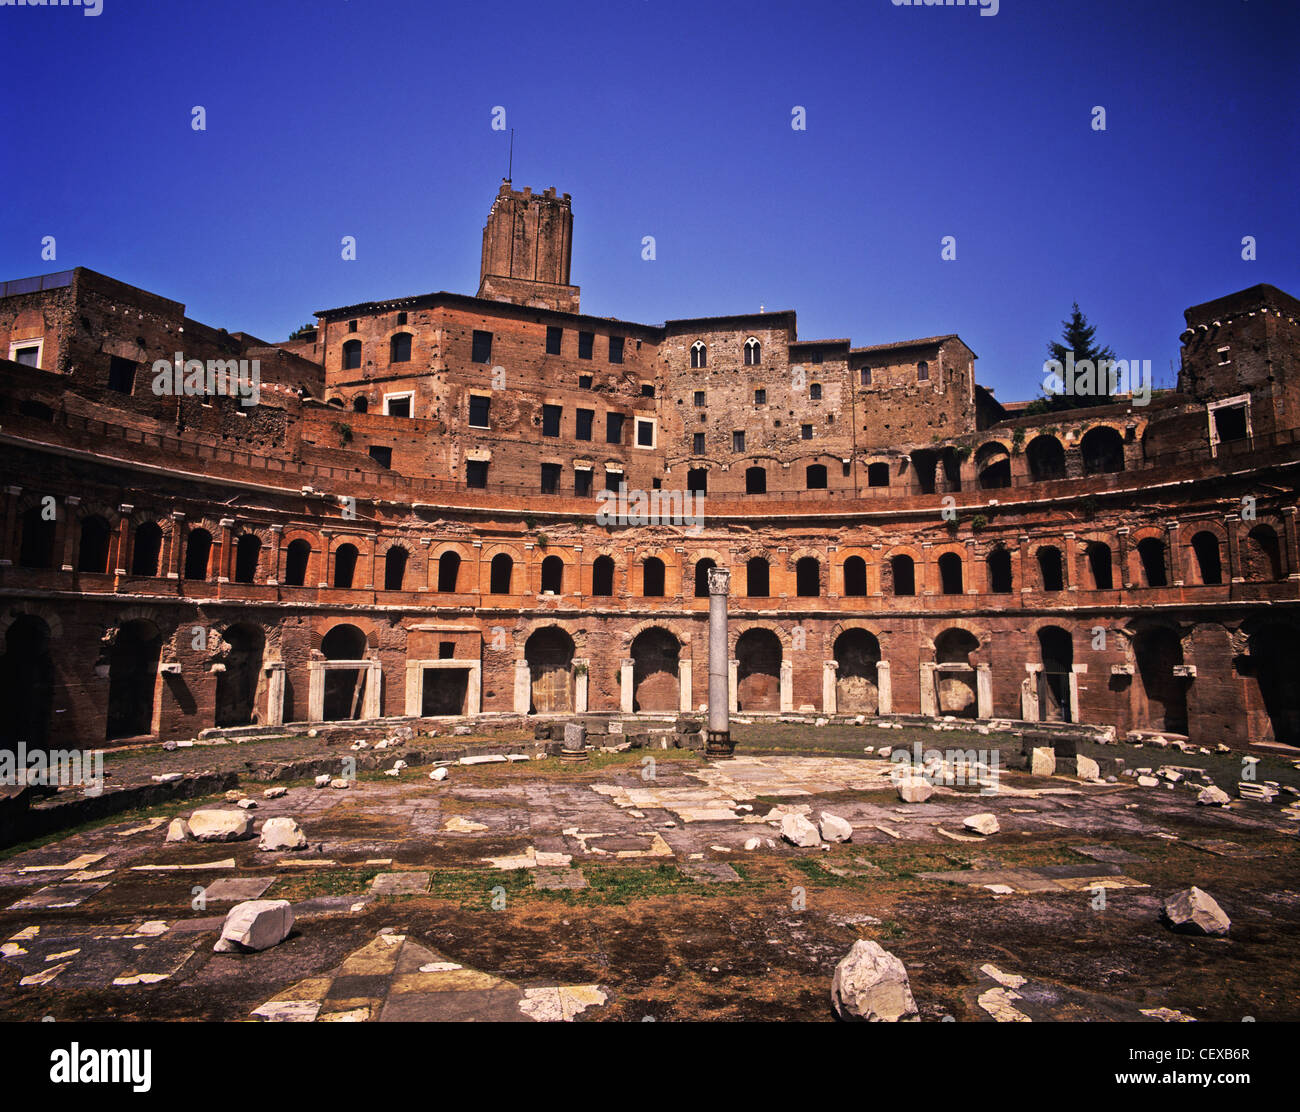 View of Trajan's forum, Rome, Italy, Europe Stock Photo